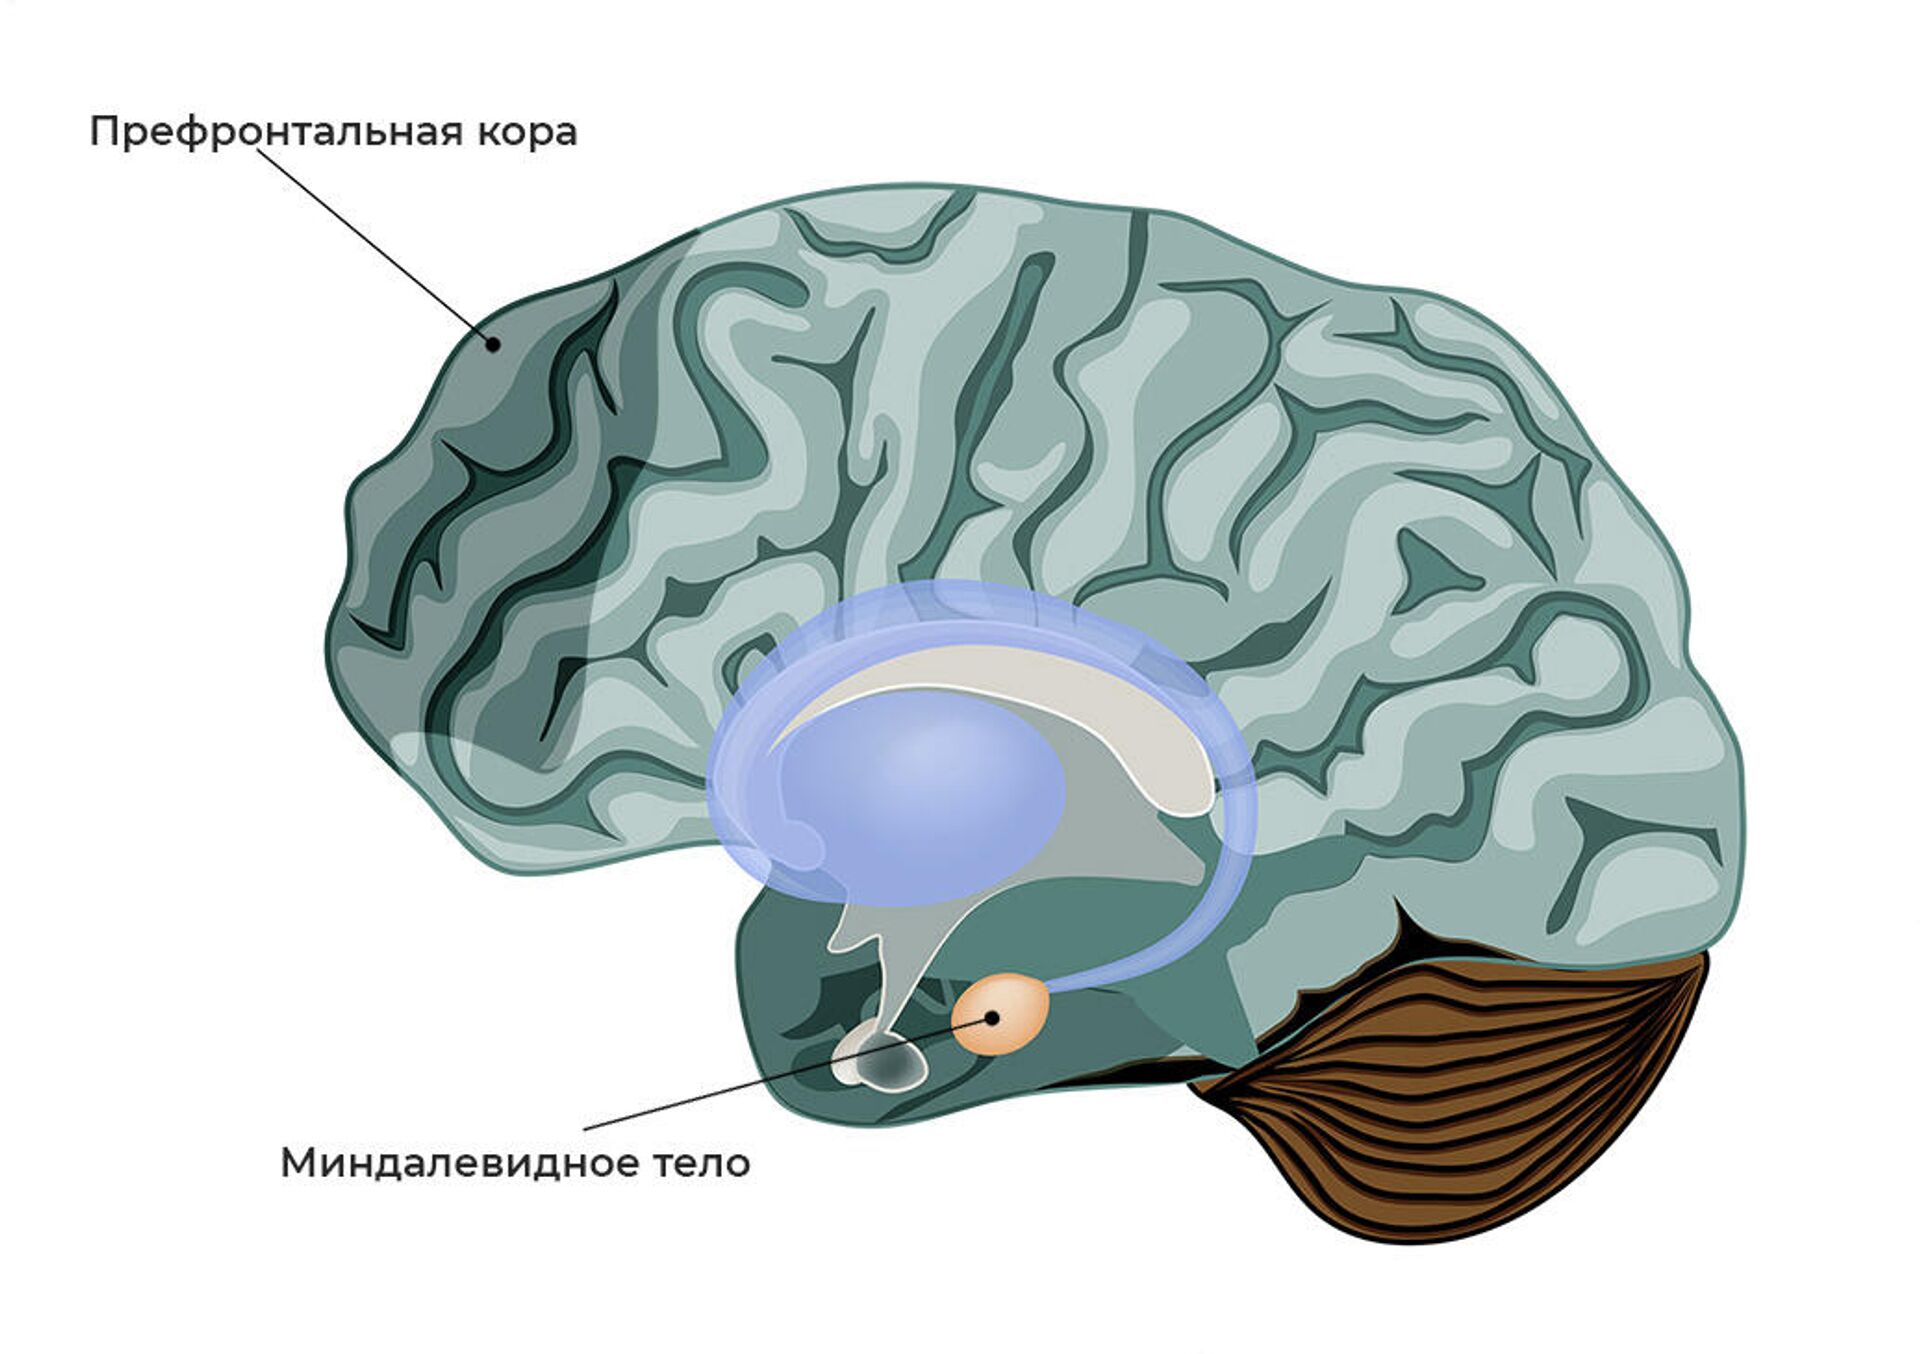 Миндалевидное тело в мозге человека - РИА Новости, 1920, 27.08.2021